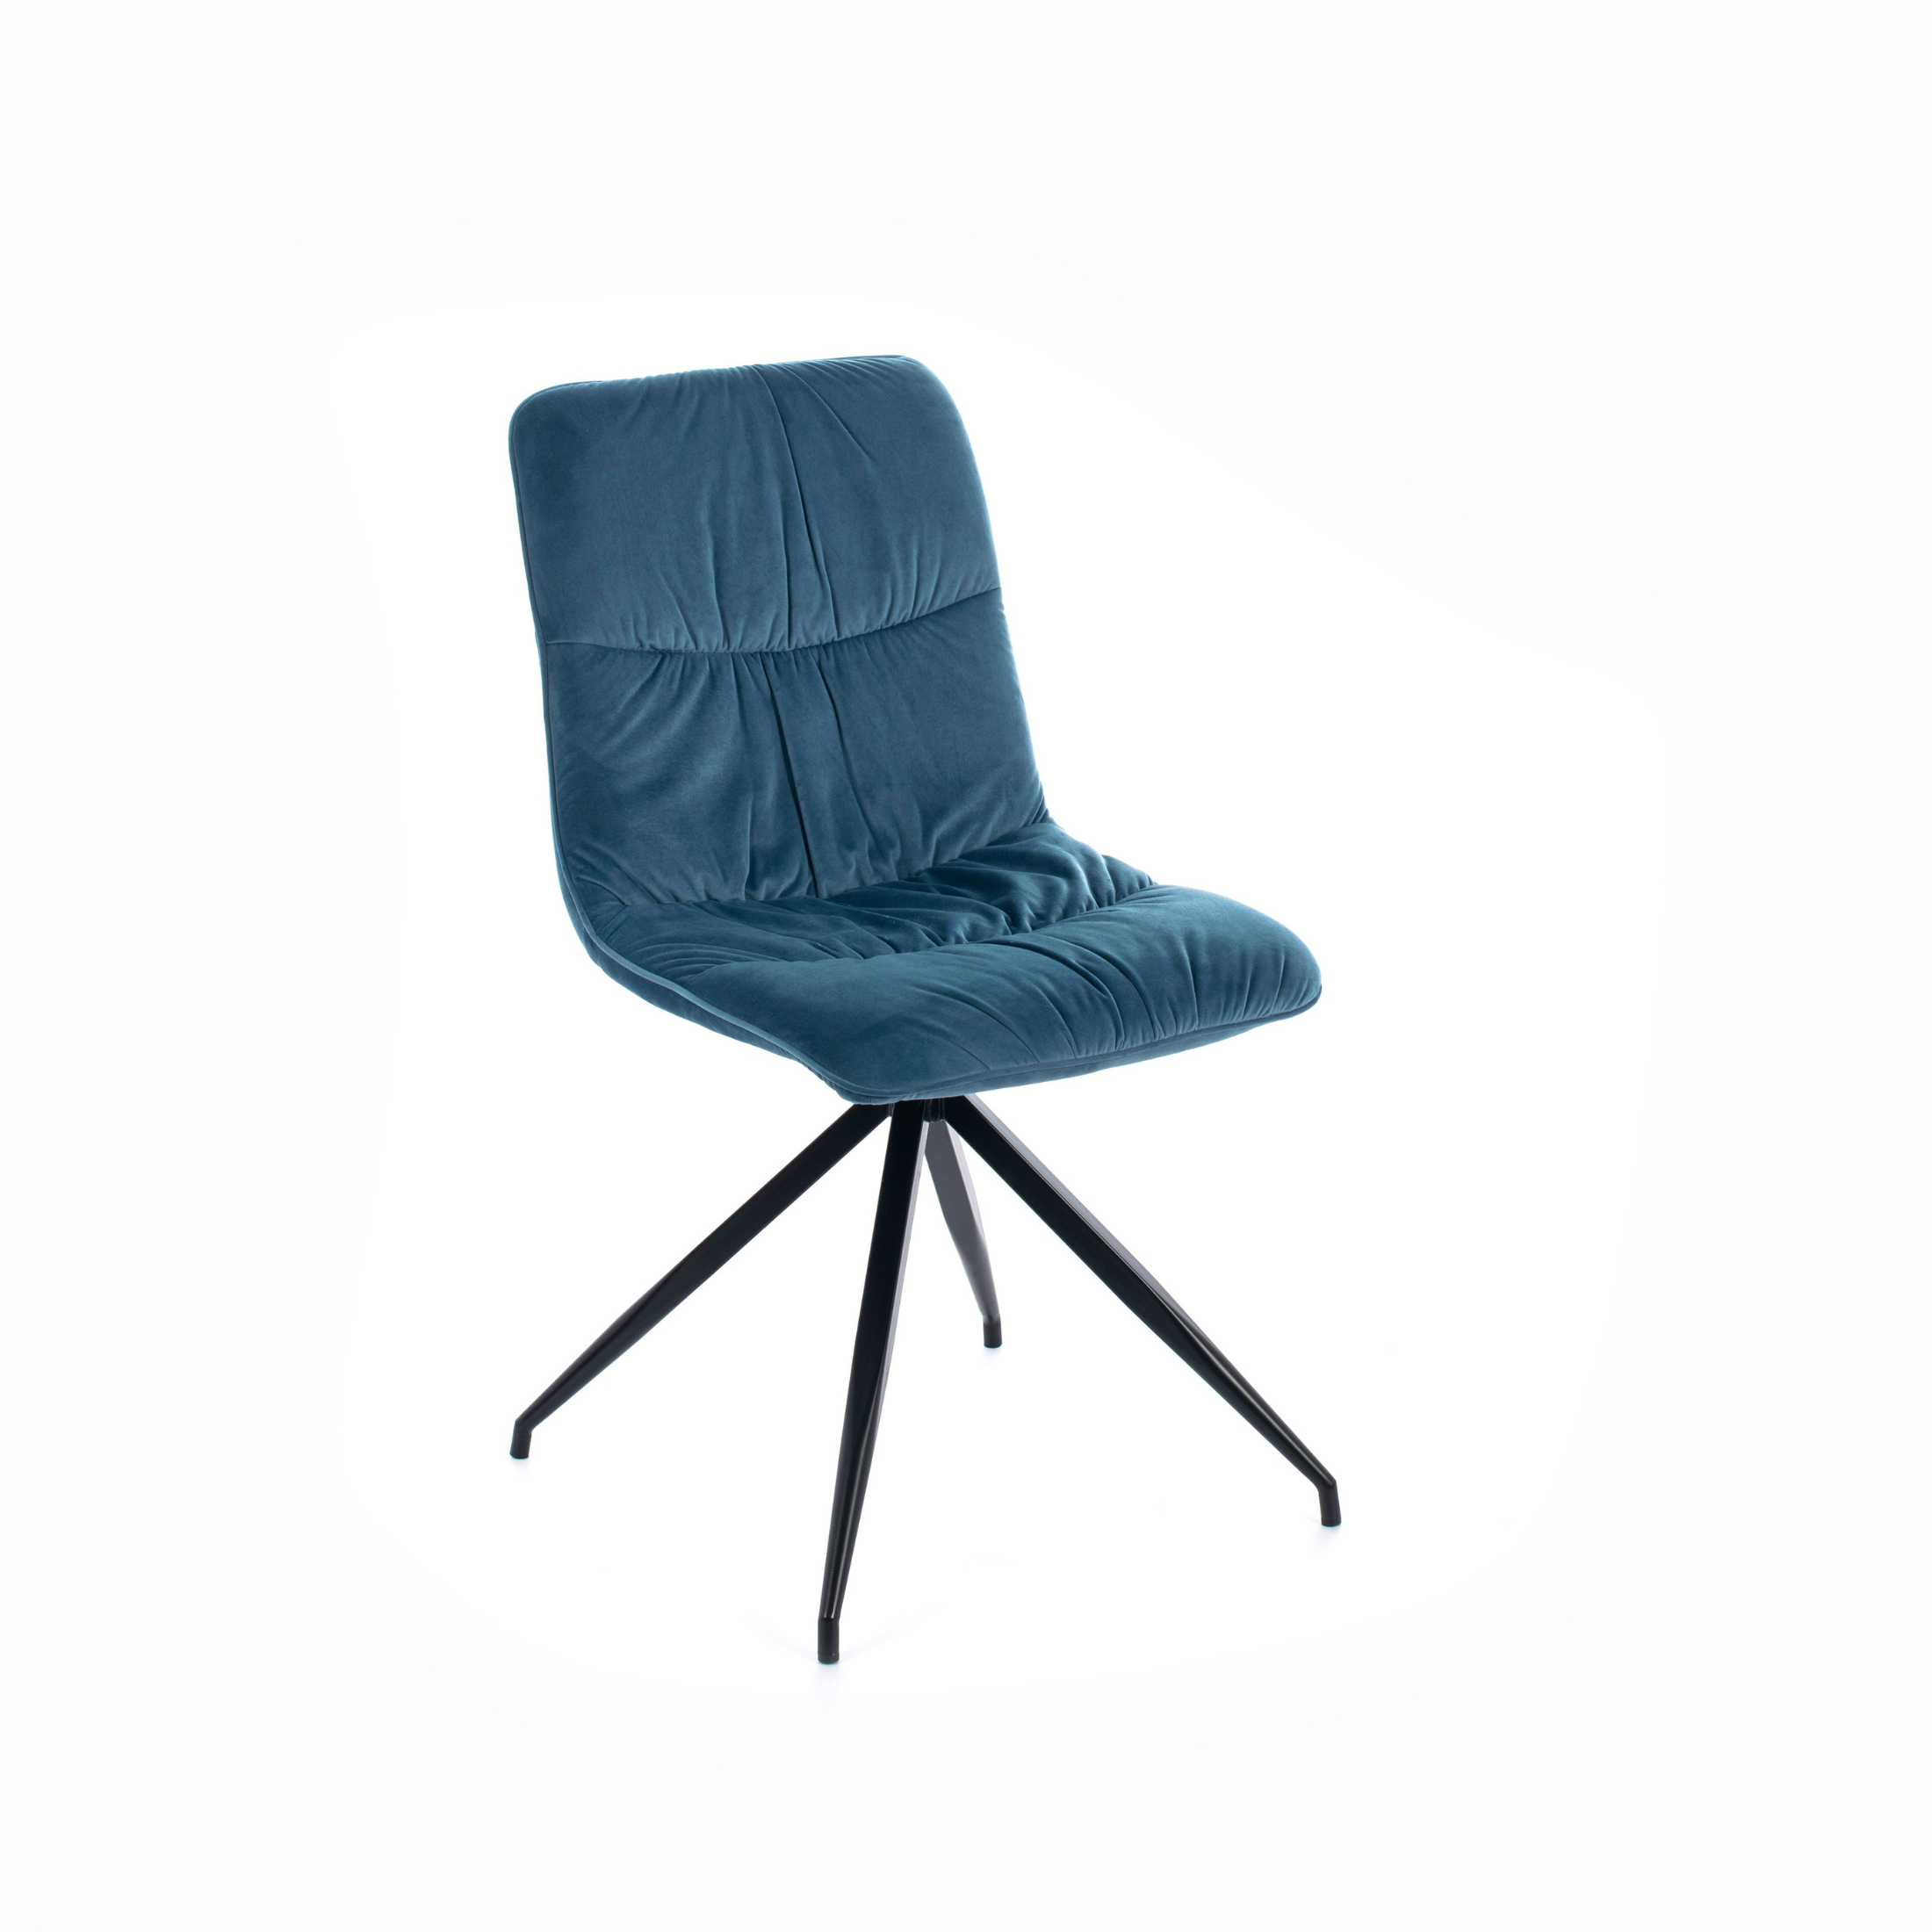 Set sedie imbottite in microfibra "Alba" poltrone moderne effetto velluto cm 38x43 86,5h